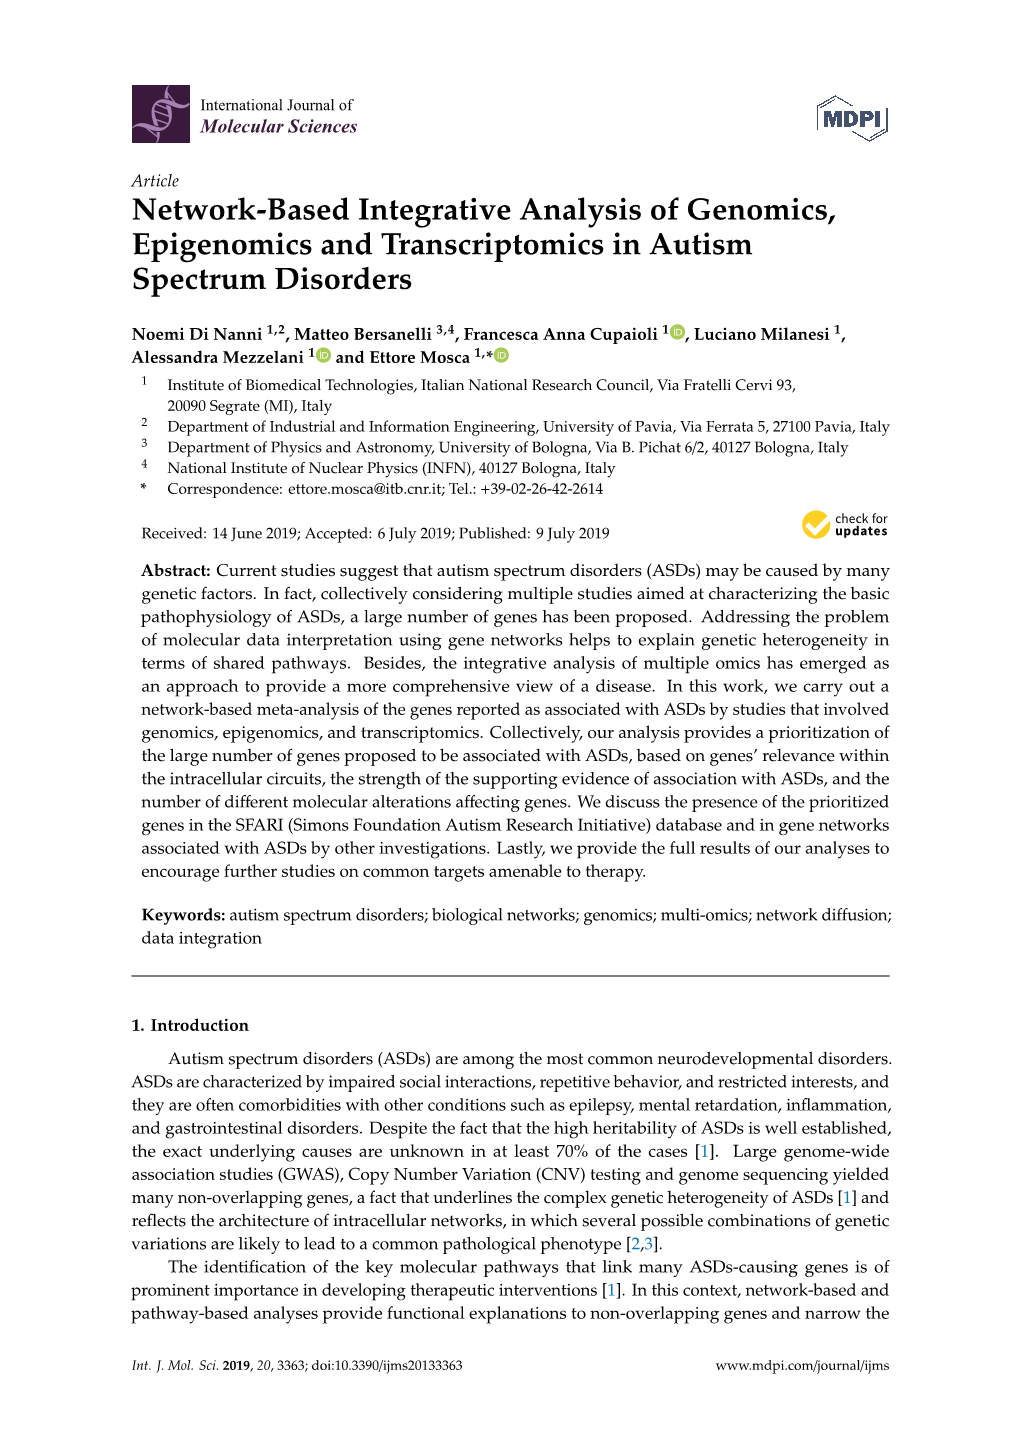 Network-Based Integrative Analysis of Genomics, Epigenomics and Transcriptomics in Autism Spectrum Disorders